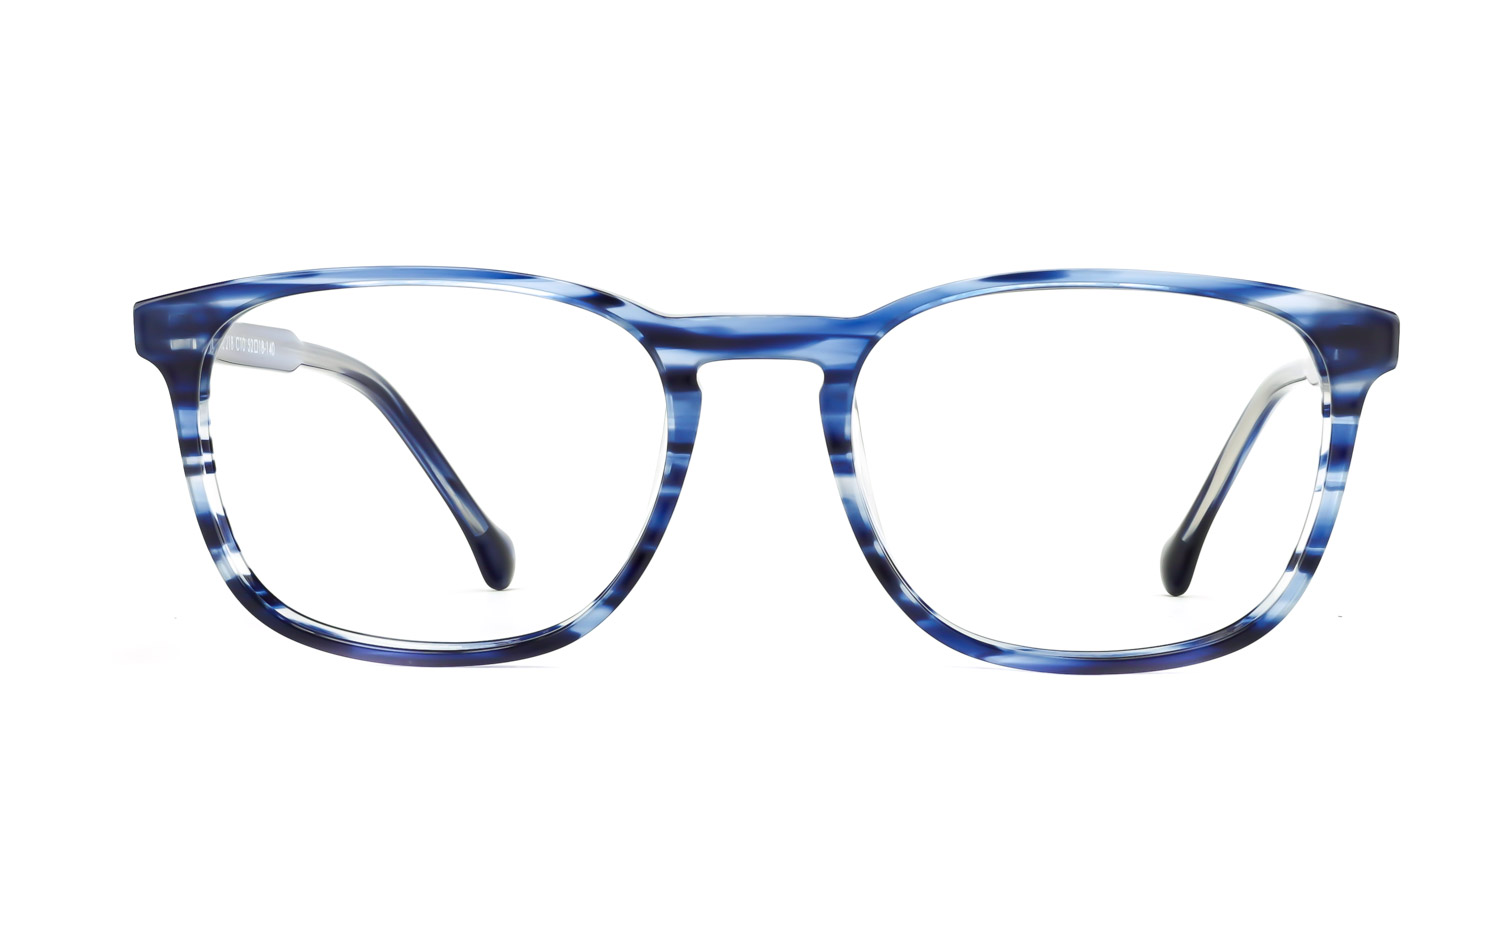 Alter Ego Unisex Shine Blue Glasses Frames - Execuspecs